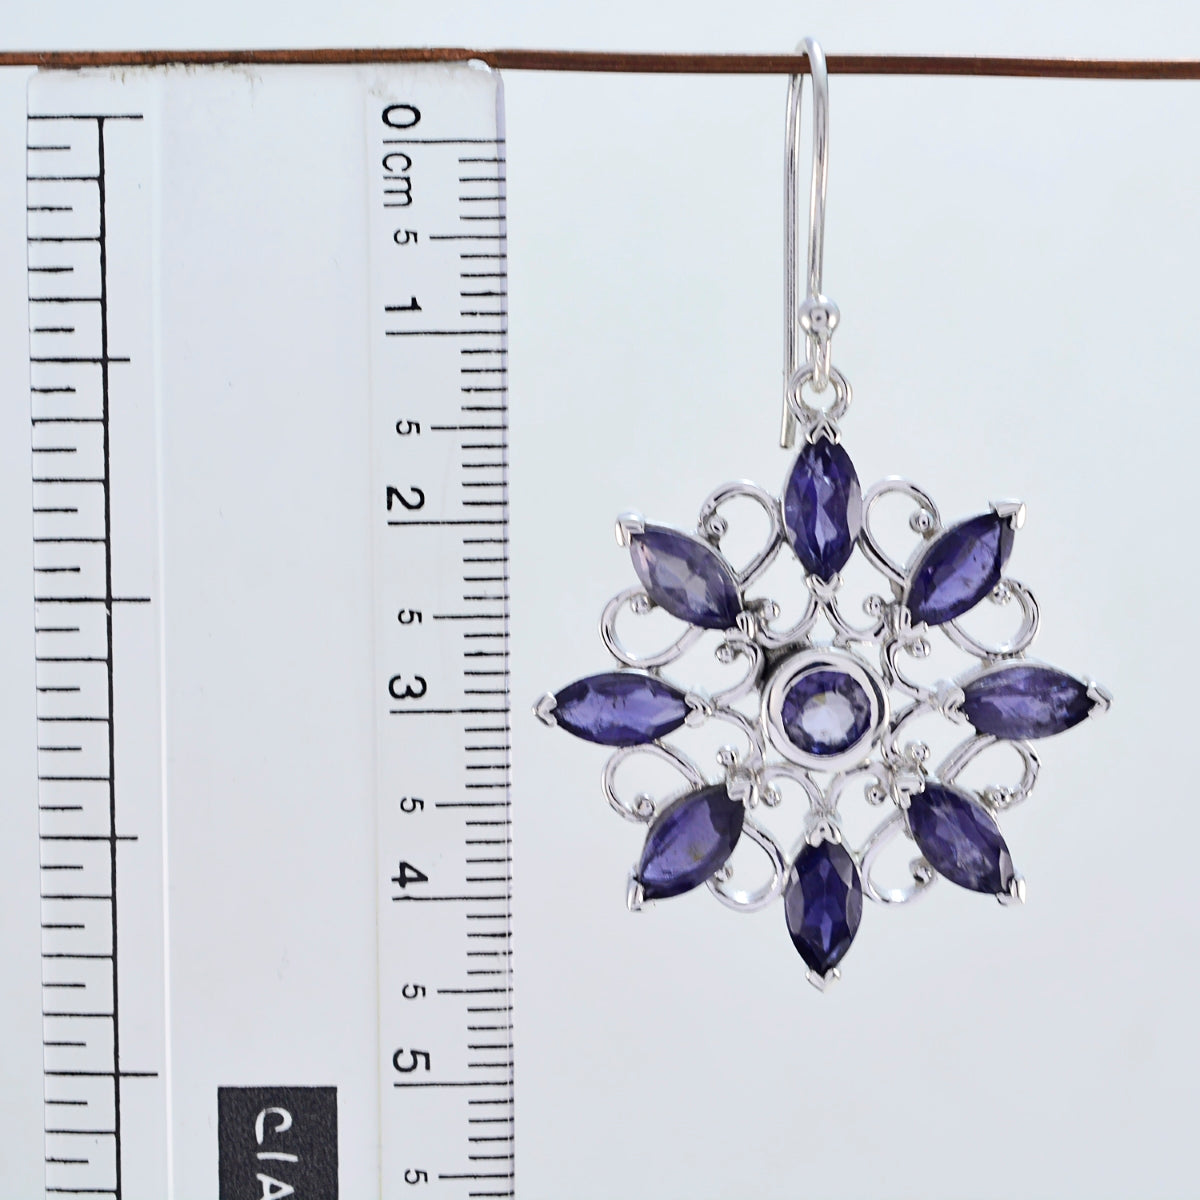 Riyo Good Gemstones multi shape Faceted Nevy Blue Iolite Silver Earring gift for halloween